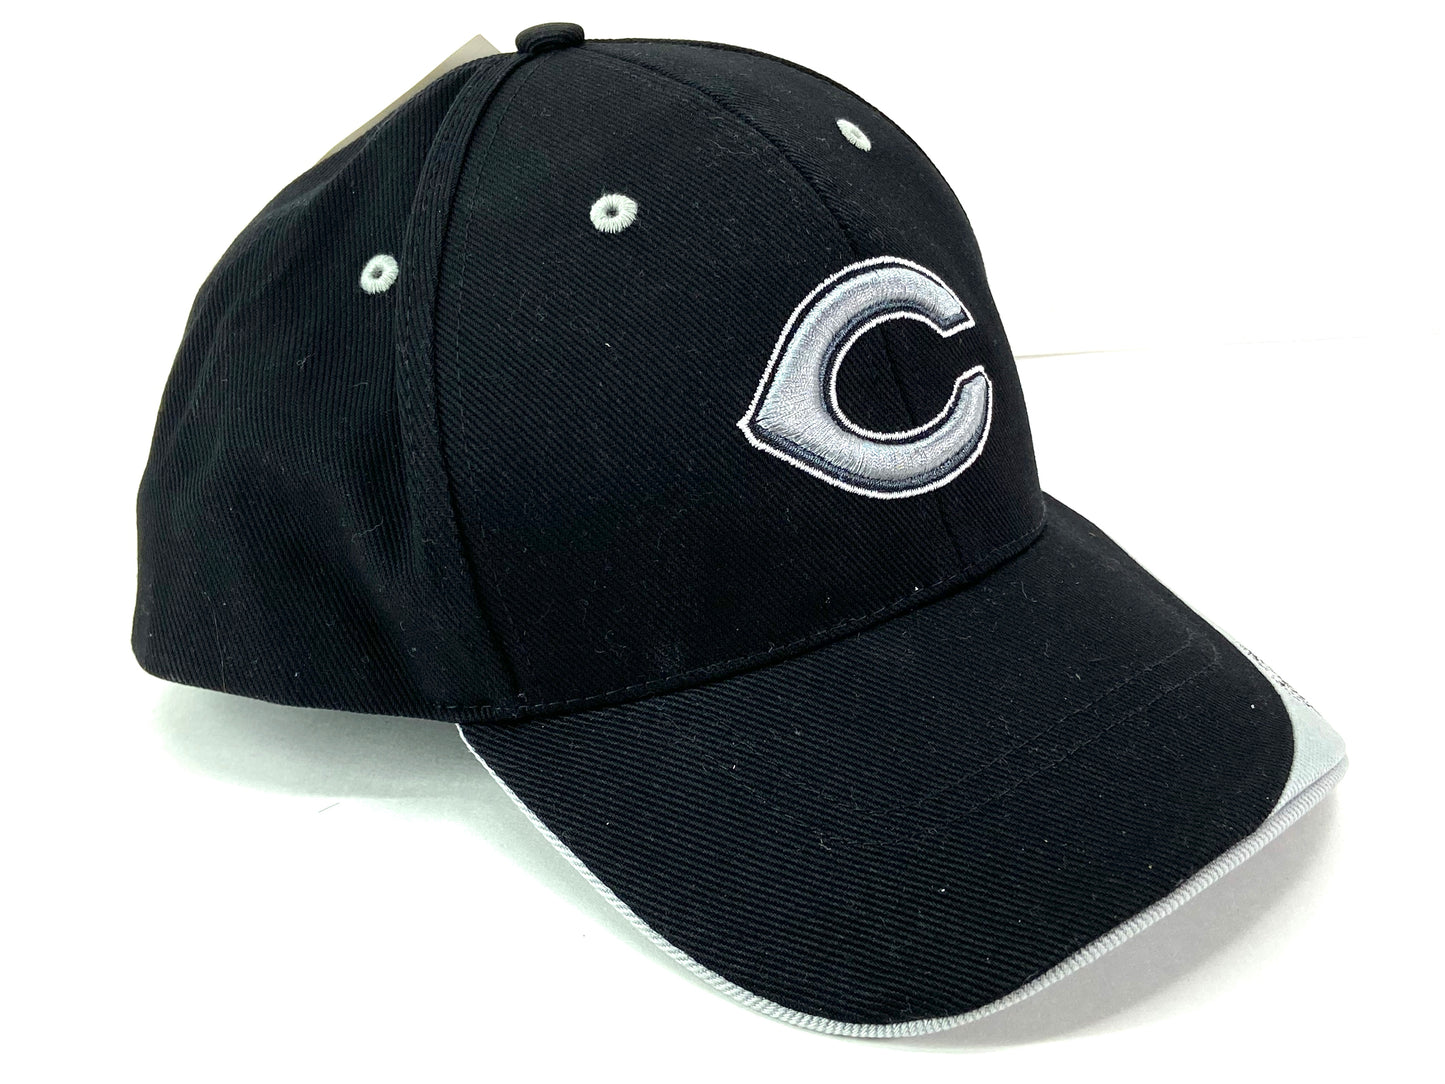 Cincinnati Reds Vintage MLB Black Cap w/Silver "C" by Twins Enterprise